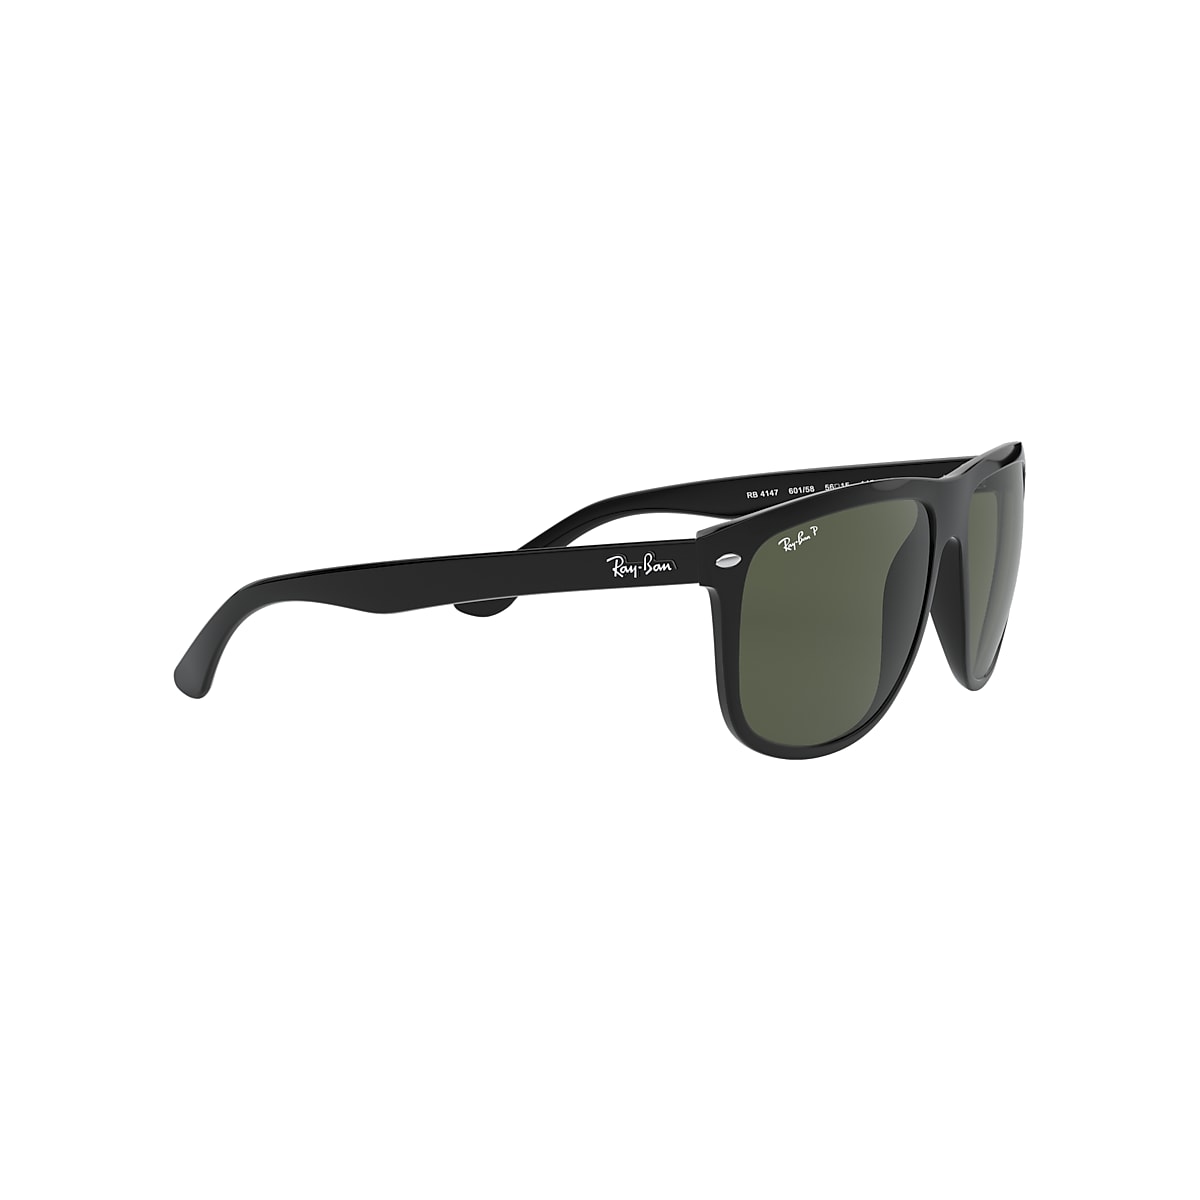 BOYFRIEND Sunglasses in and Dark - RB4147 | Ray-Ban® US